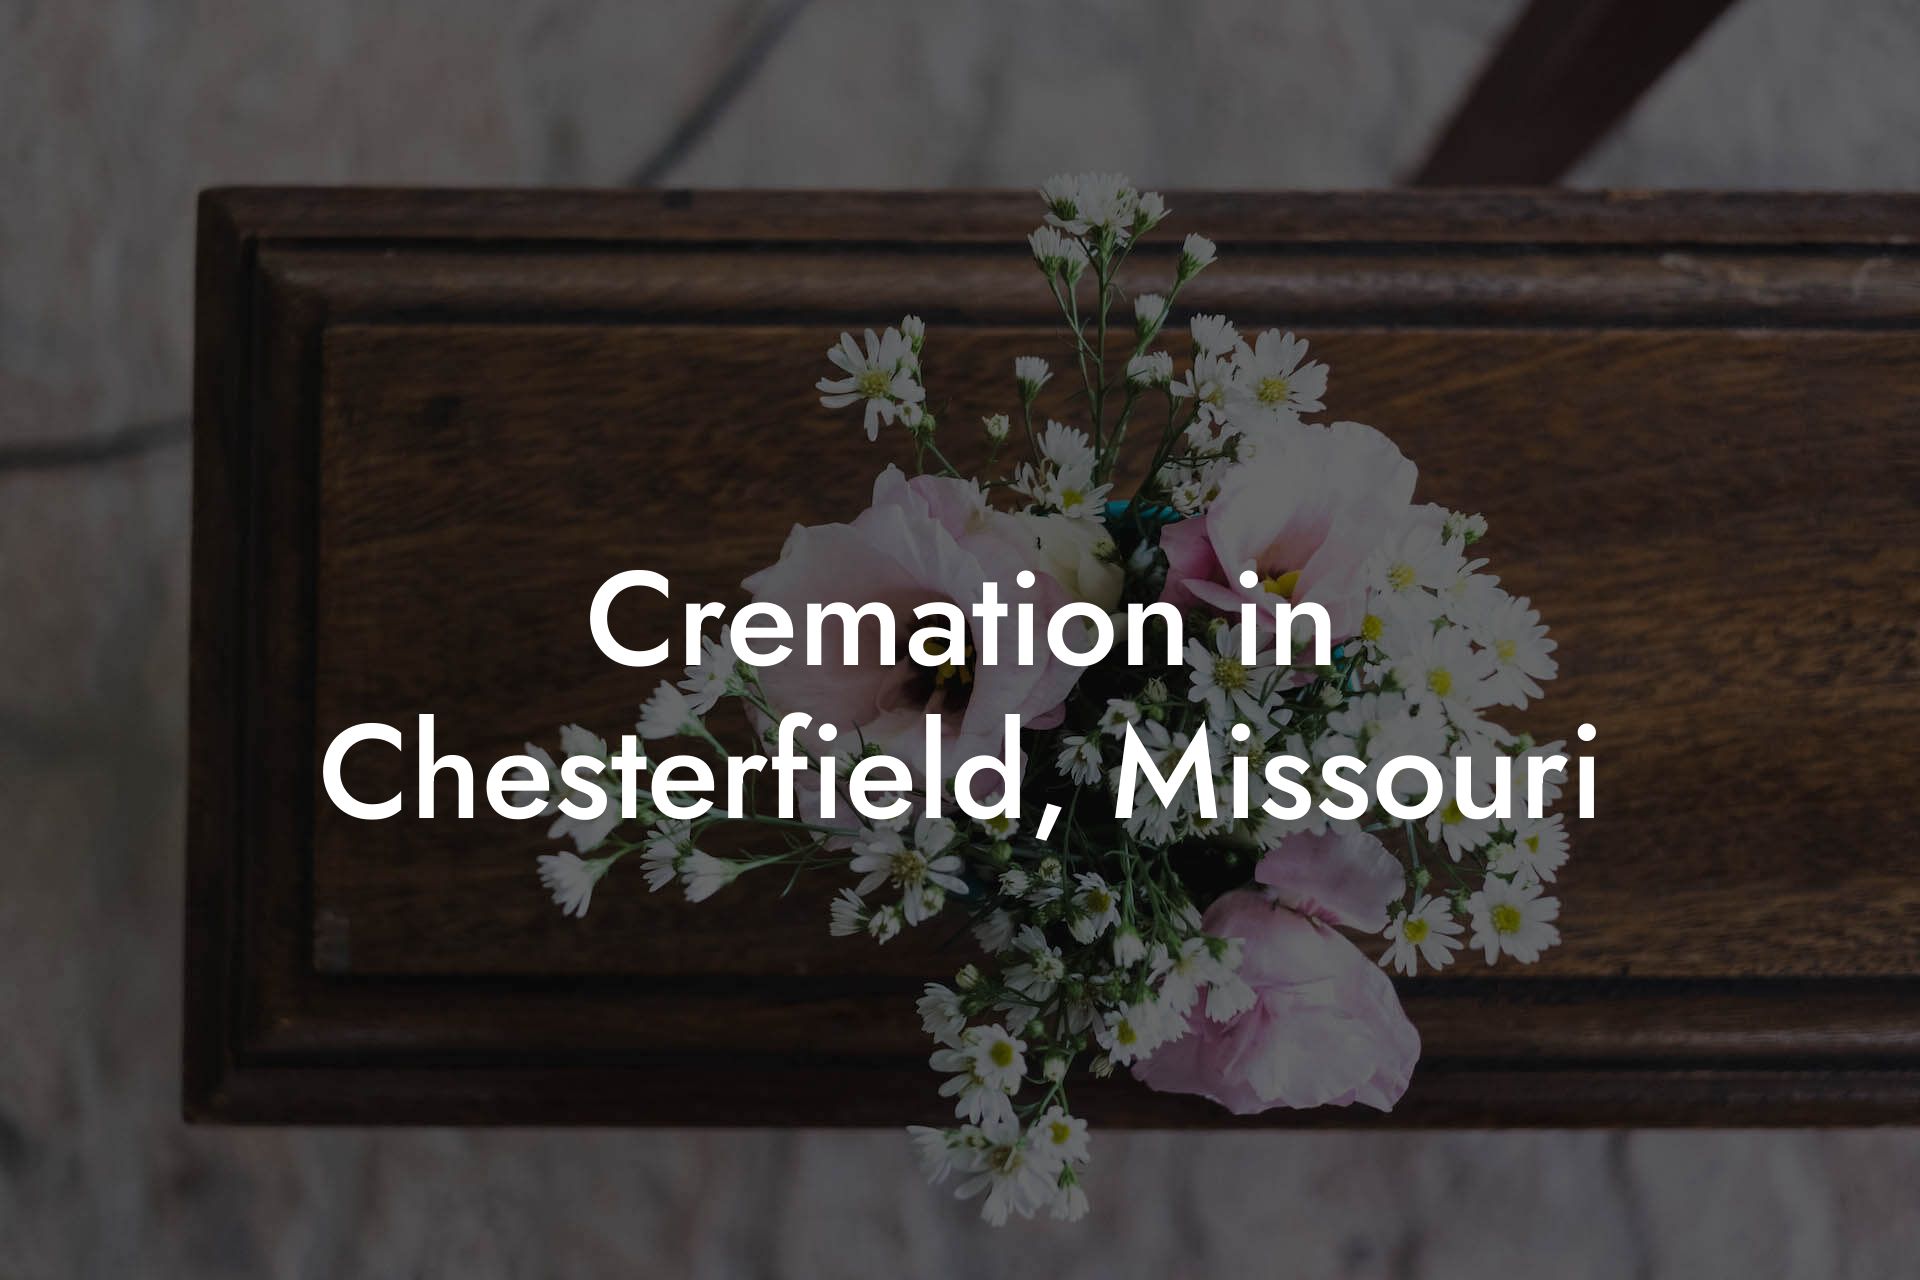 Cremation in Chesterfield, Missouri